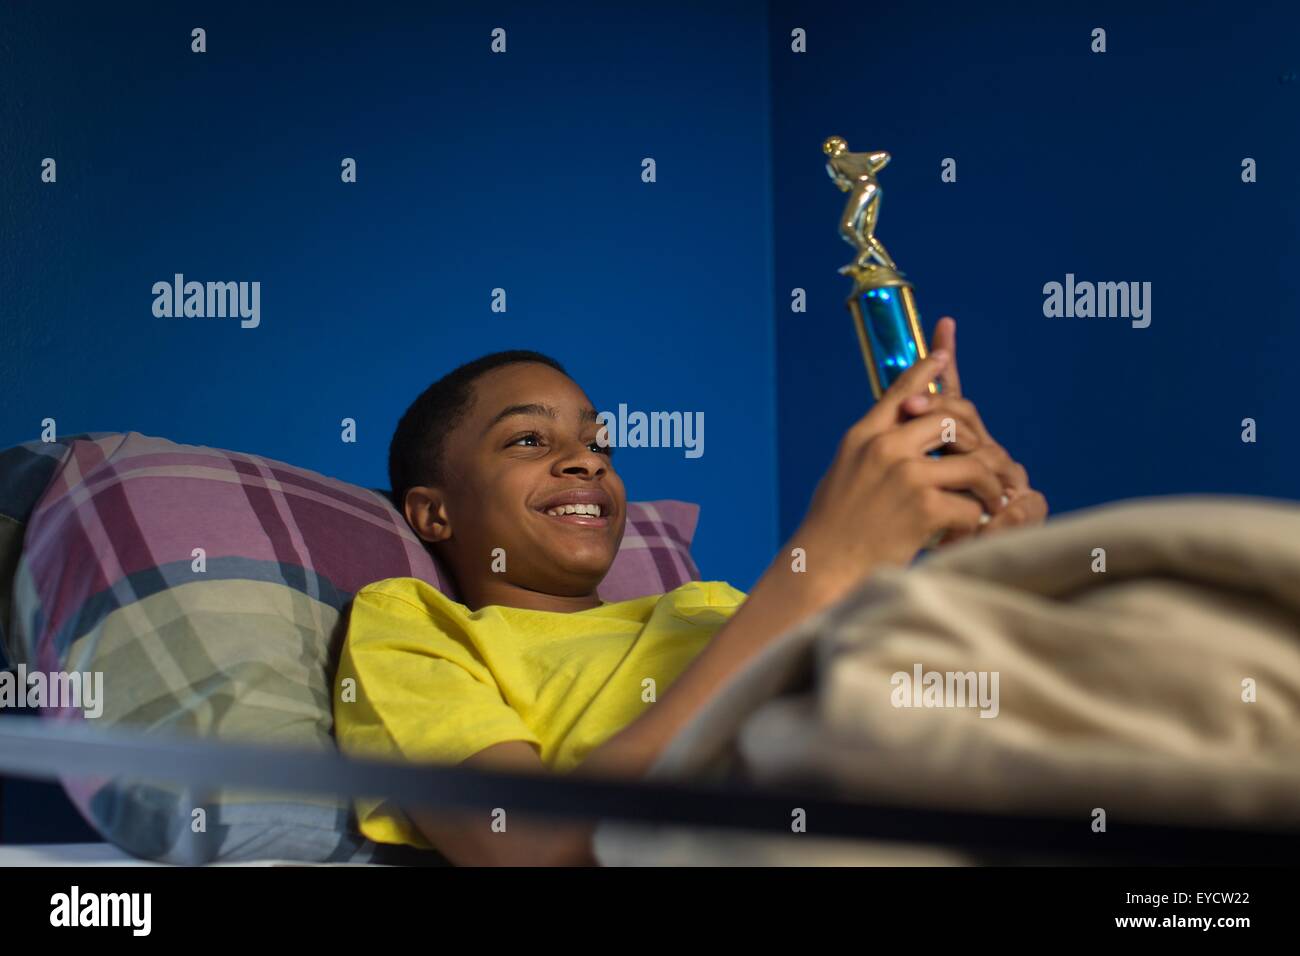 Teenage boy lying in bunkbed admiring trophy Stock Photo